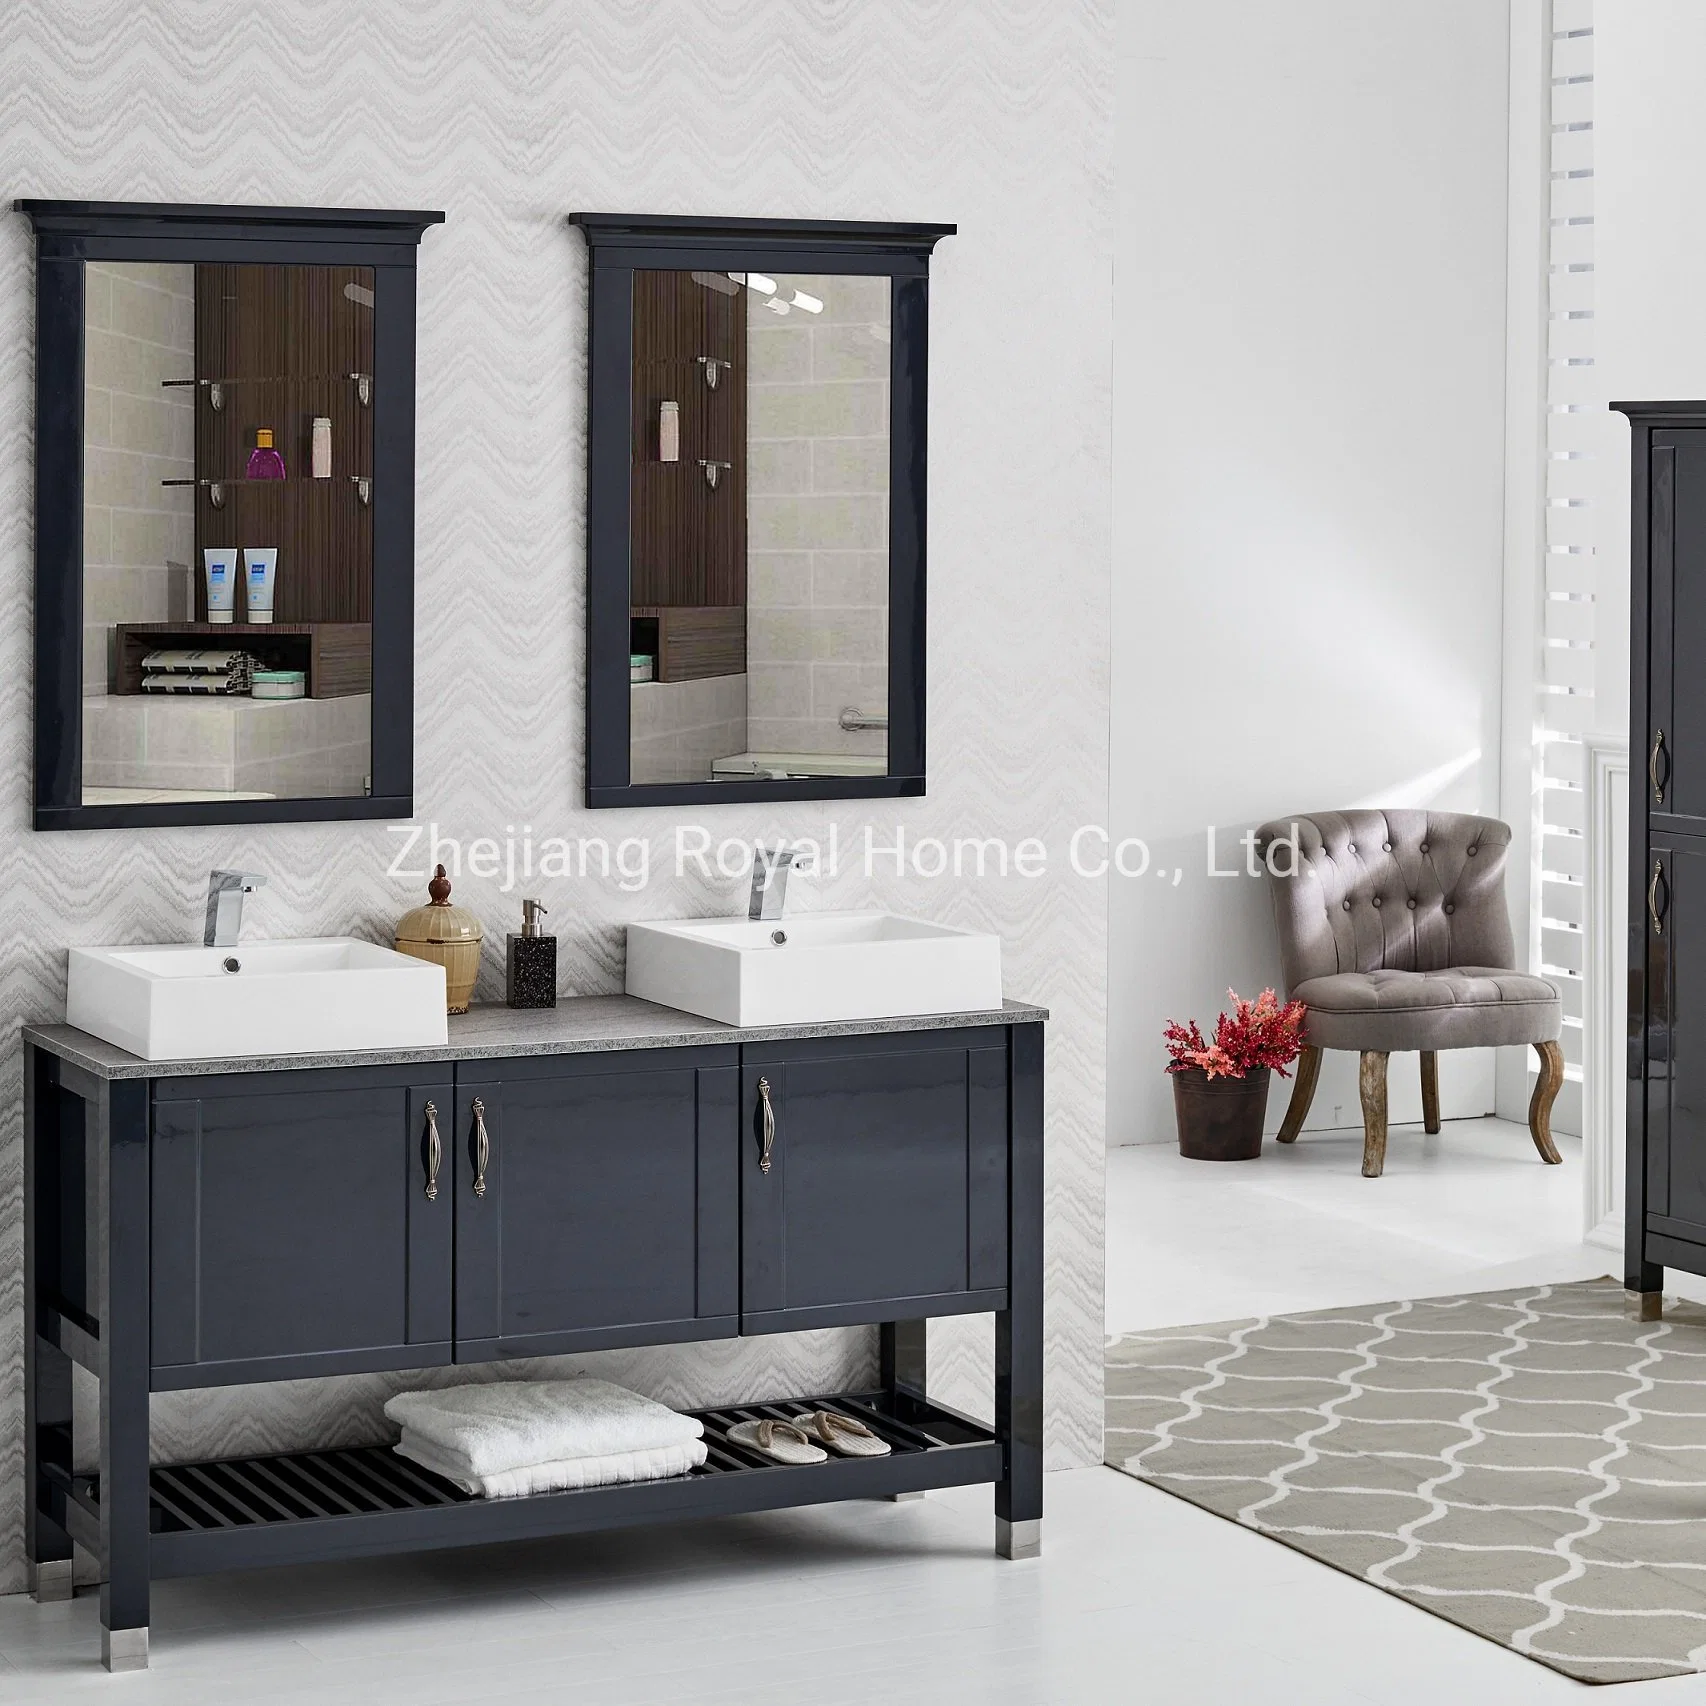 Wholesale Price Modern Wooden Lacquer Mirror Bathroom Designer Vanities Basin Bathroom Cabinet